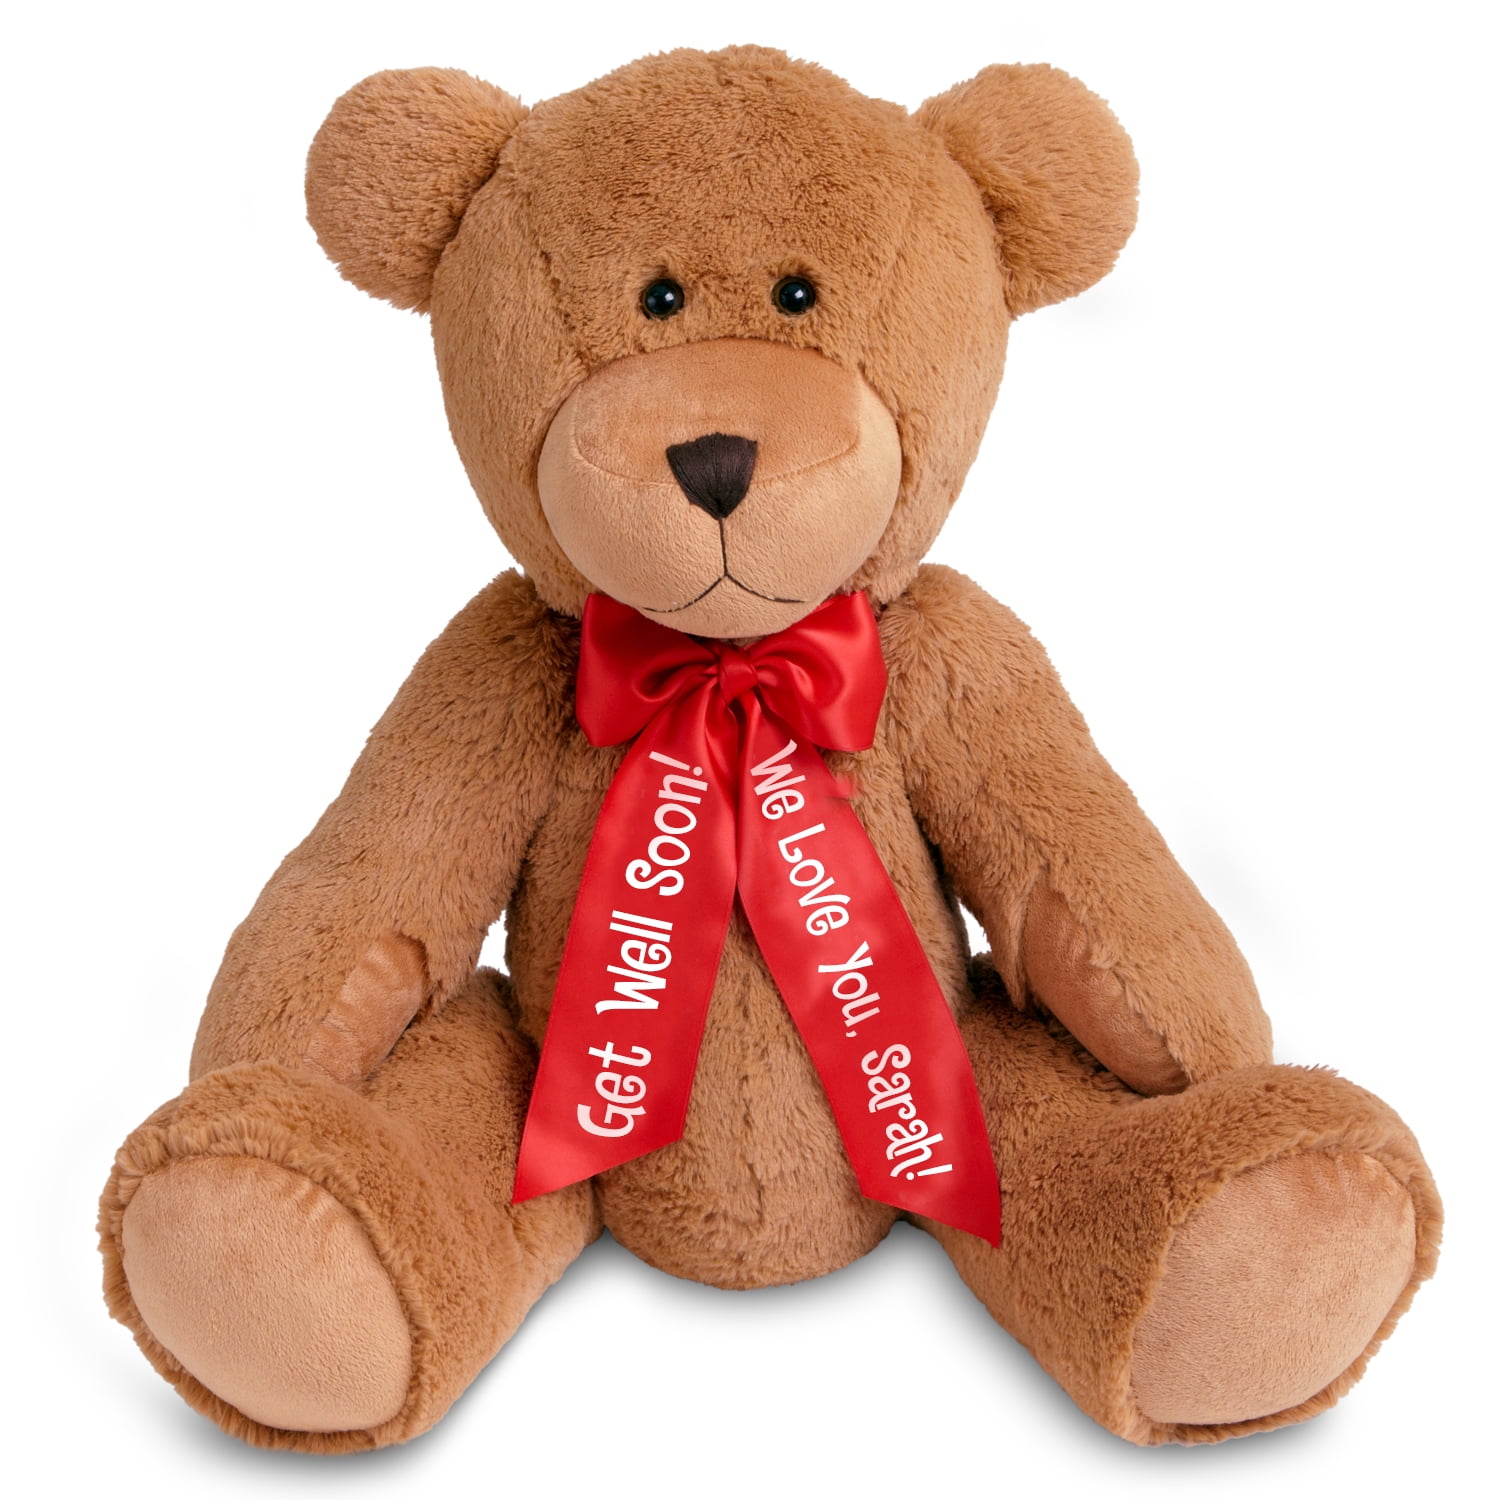 giant stuffed teddy bear walmart